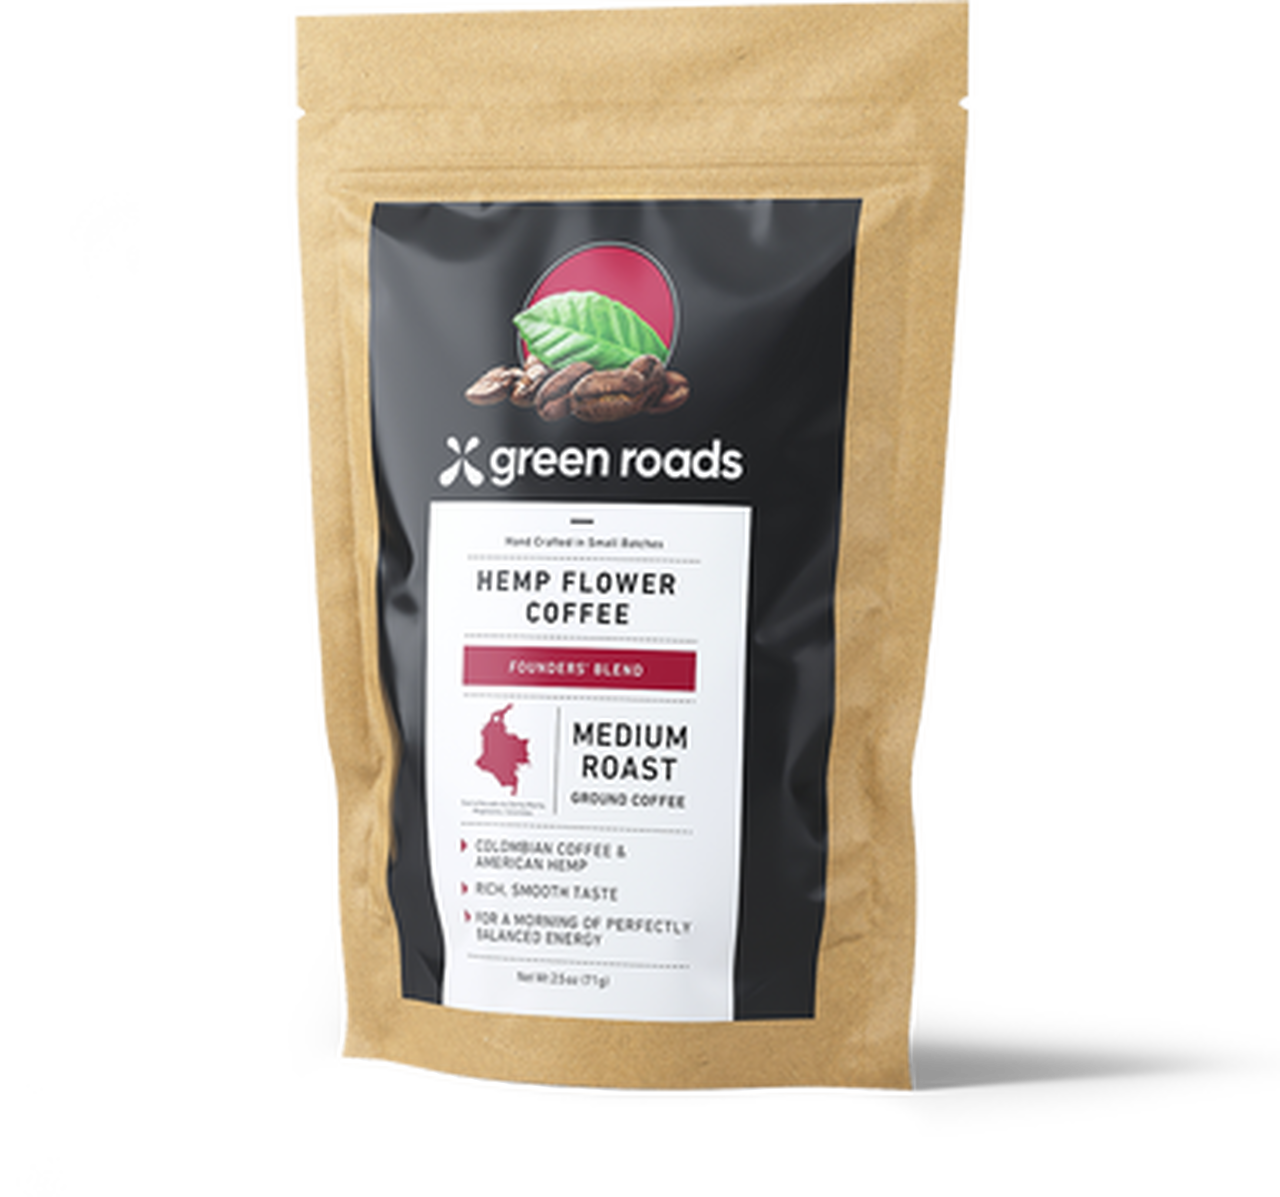 Hemp CBD Coffee - Medium Roast Founder's Blend Hemp Flower Coffee 2.5 oz bag